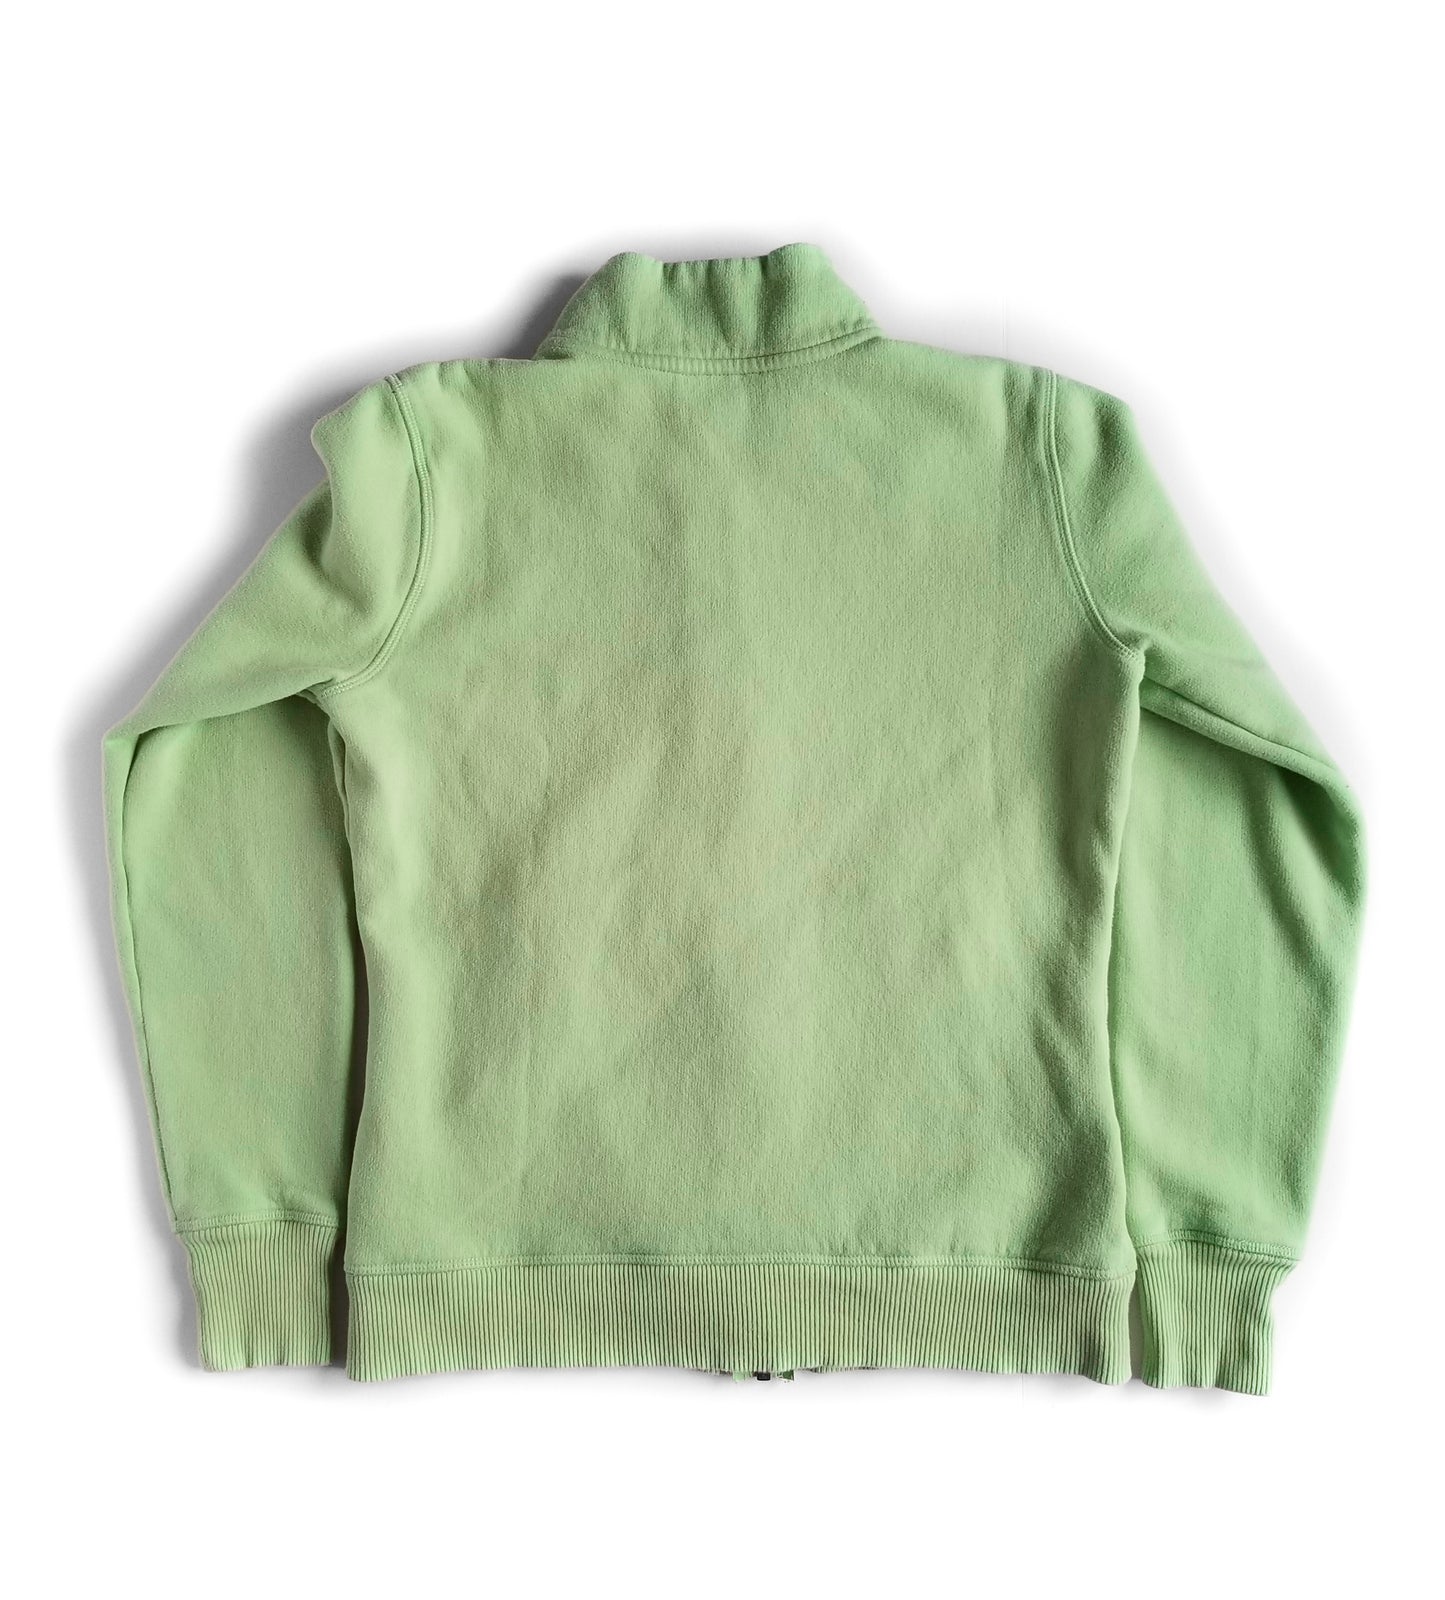 Ariat Full Zip Sweater - Light Lime Green - Women's Small